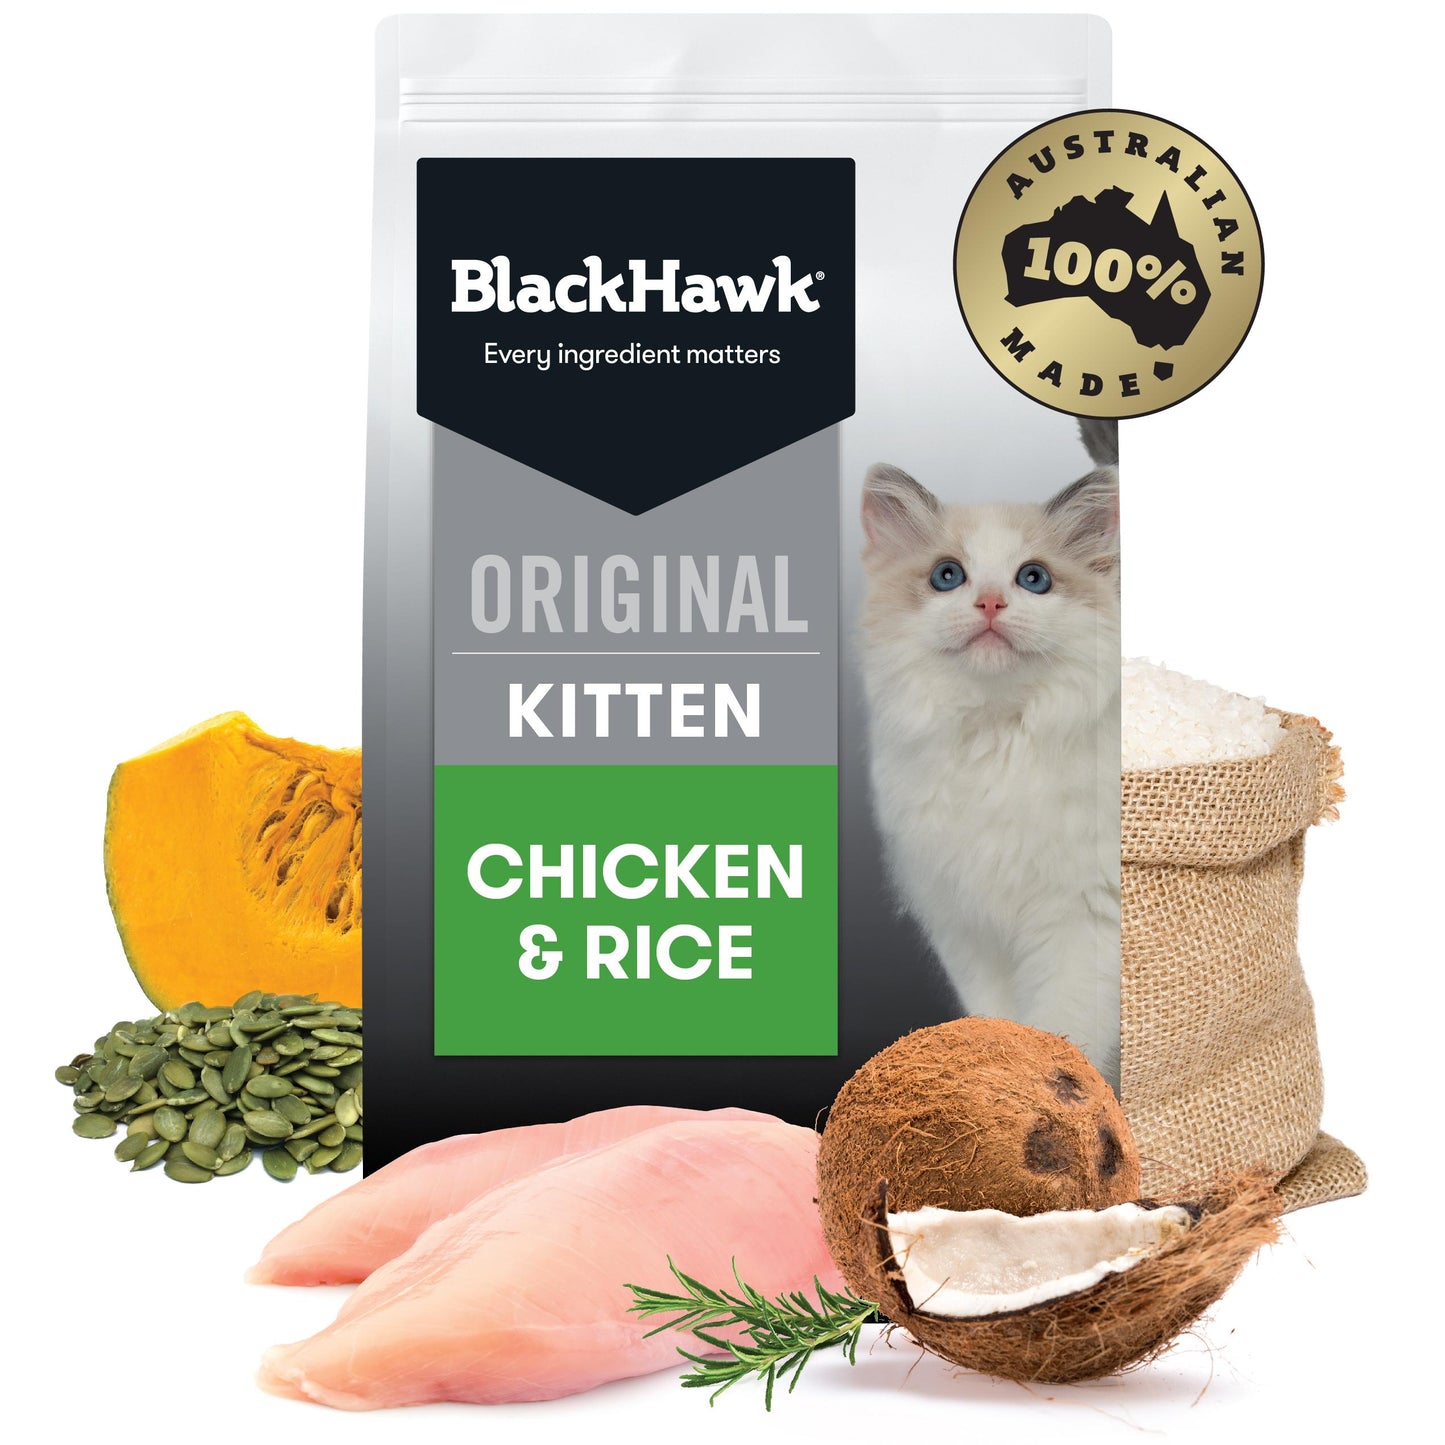 Black Hawk Original Kitten Chicken